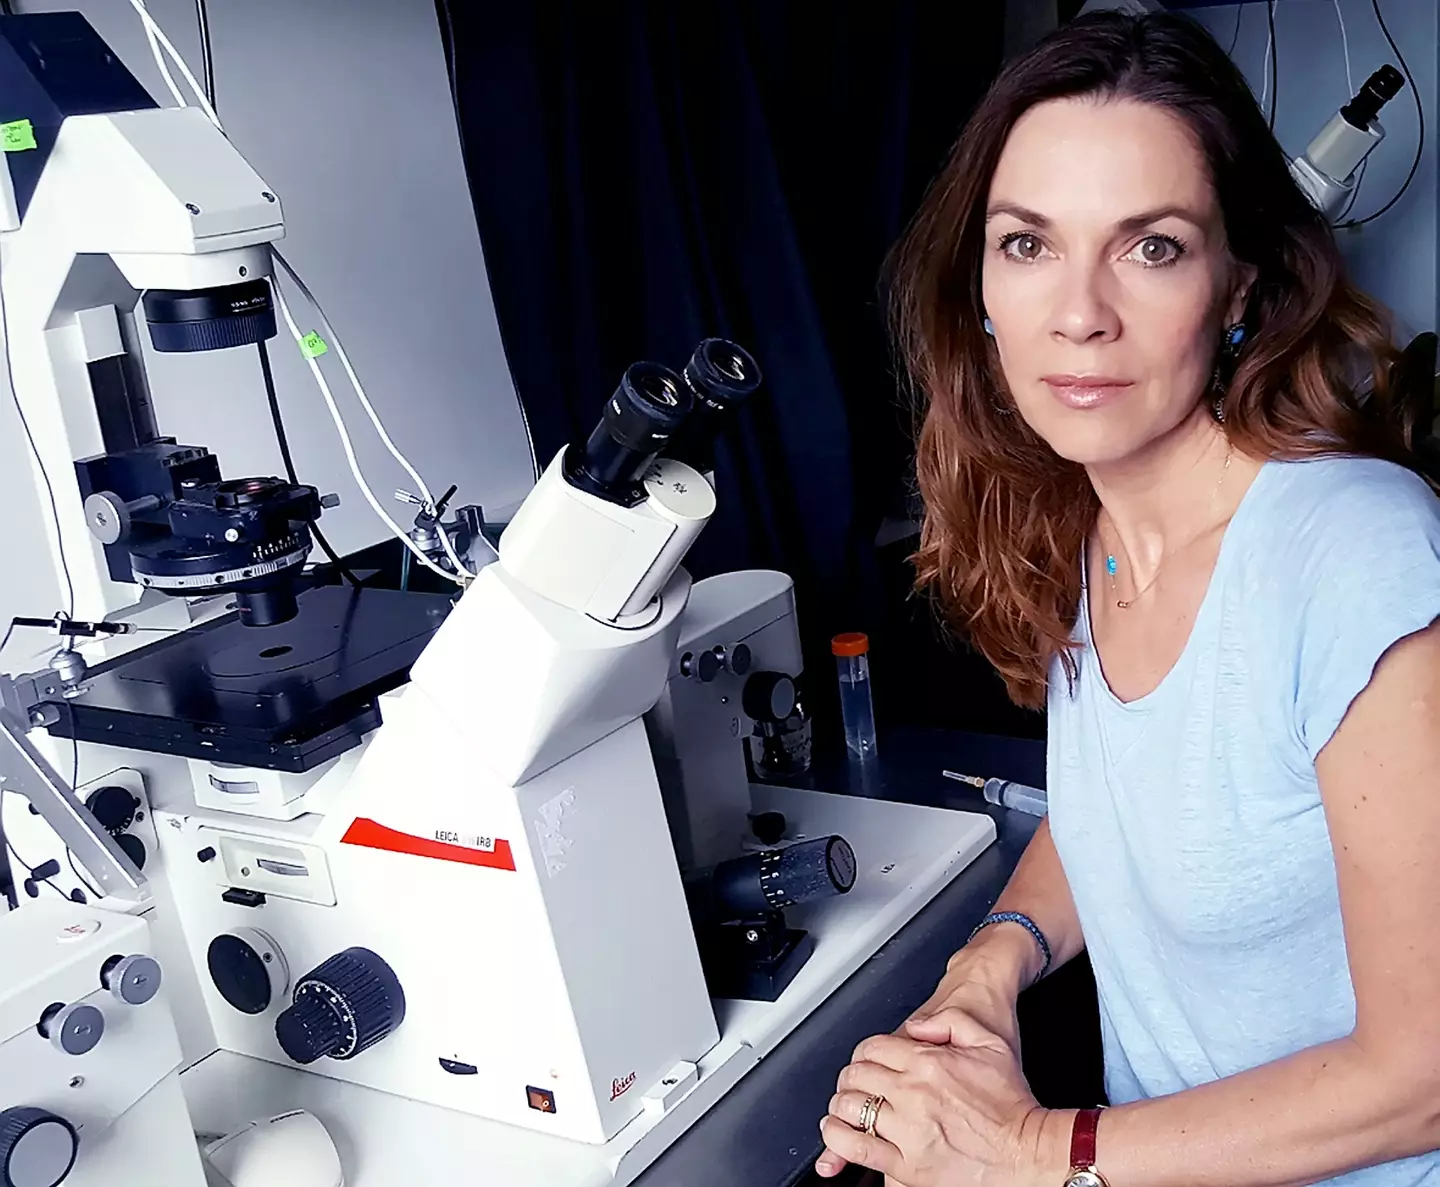 Professor Magdalena Zernicka-Goetz said the creation of the embryo is 'unbelievable'.